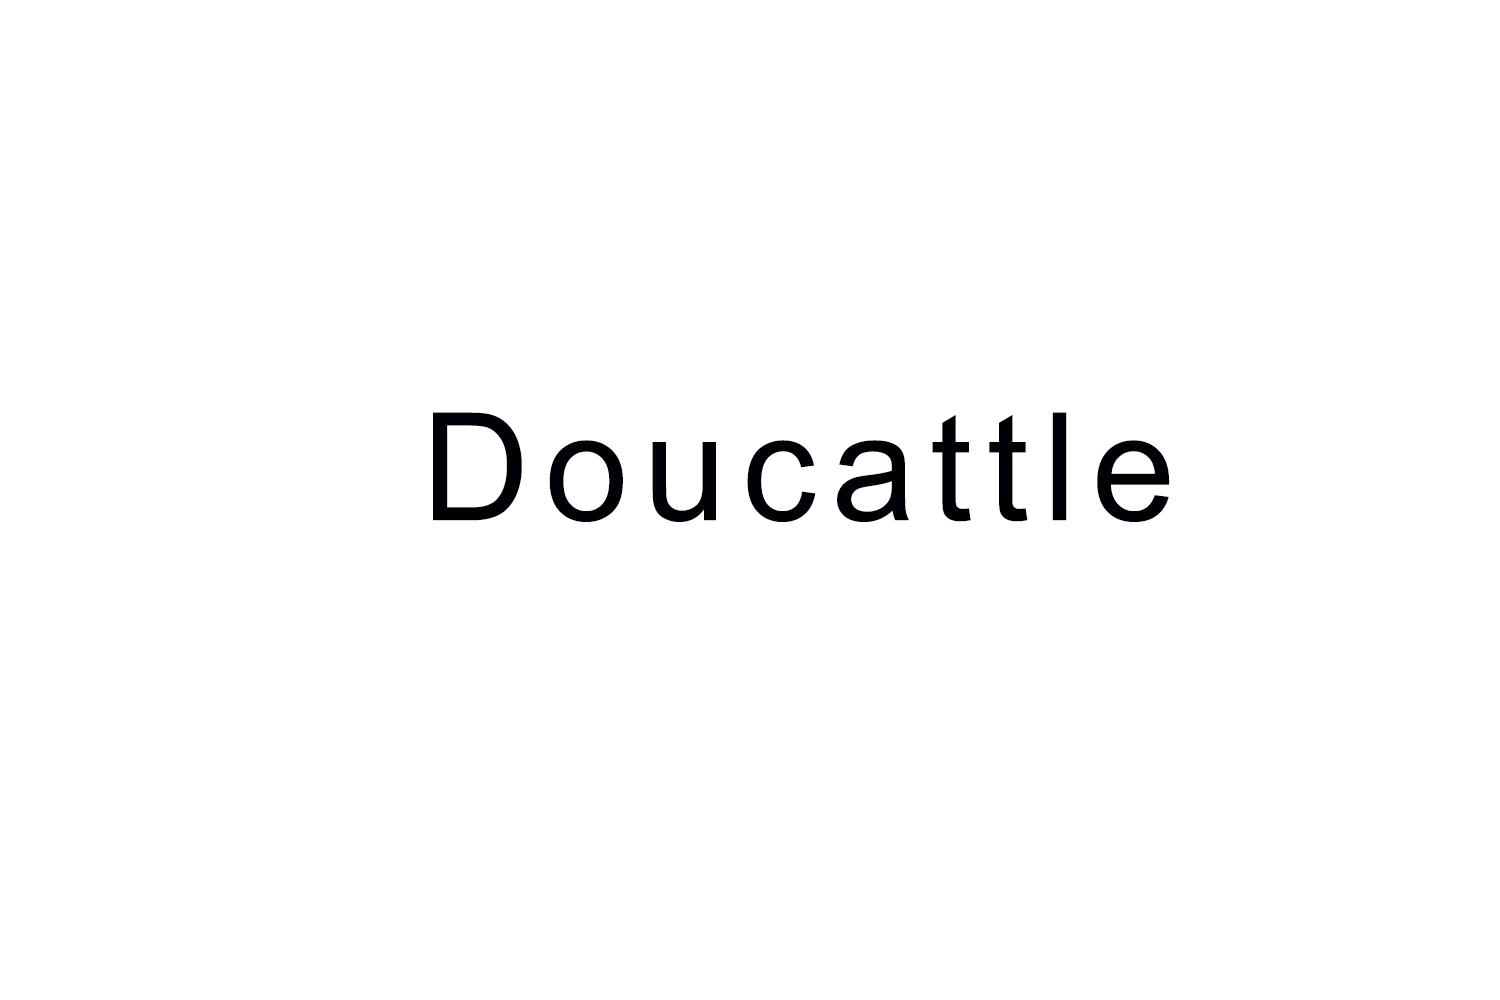 DOUCATTLE